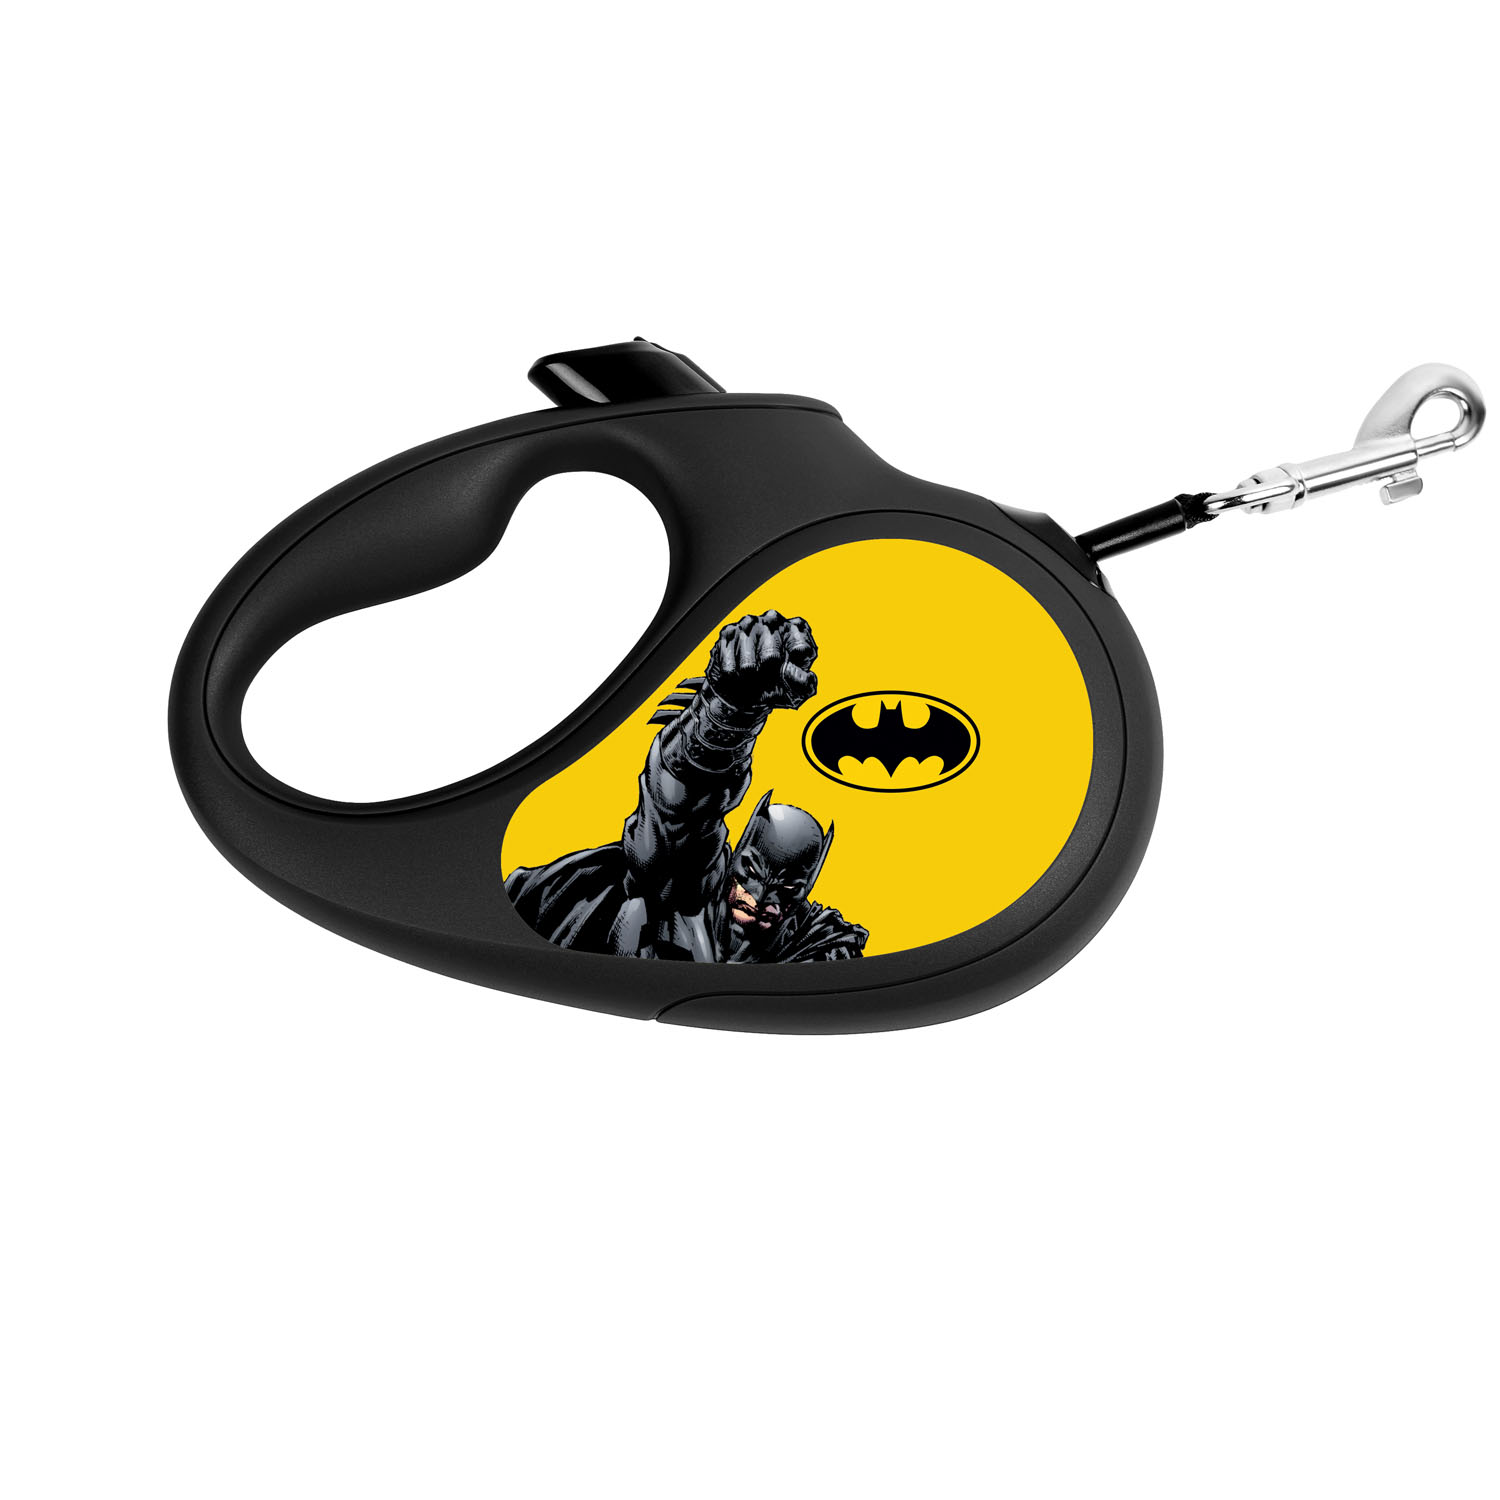 Wau Dog Поводок-рулетка WAUDOG с рисунком Бэтмен Желтый, размер XS, до 12 кг,3 м черная